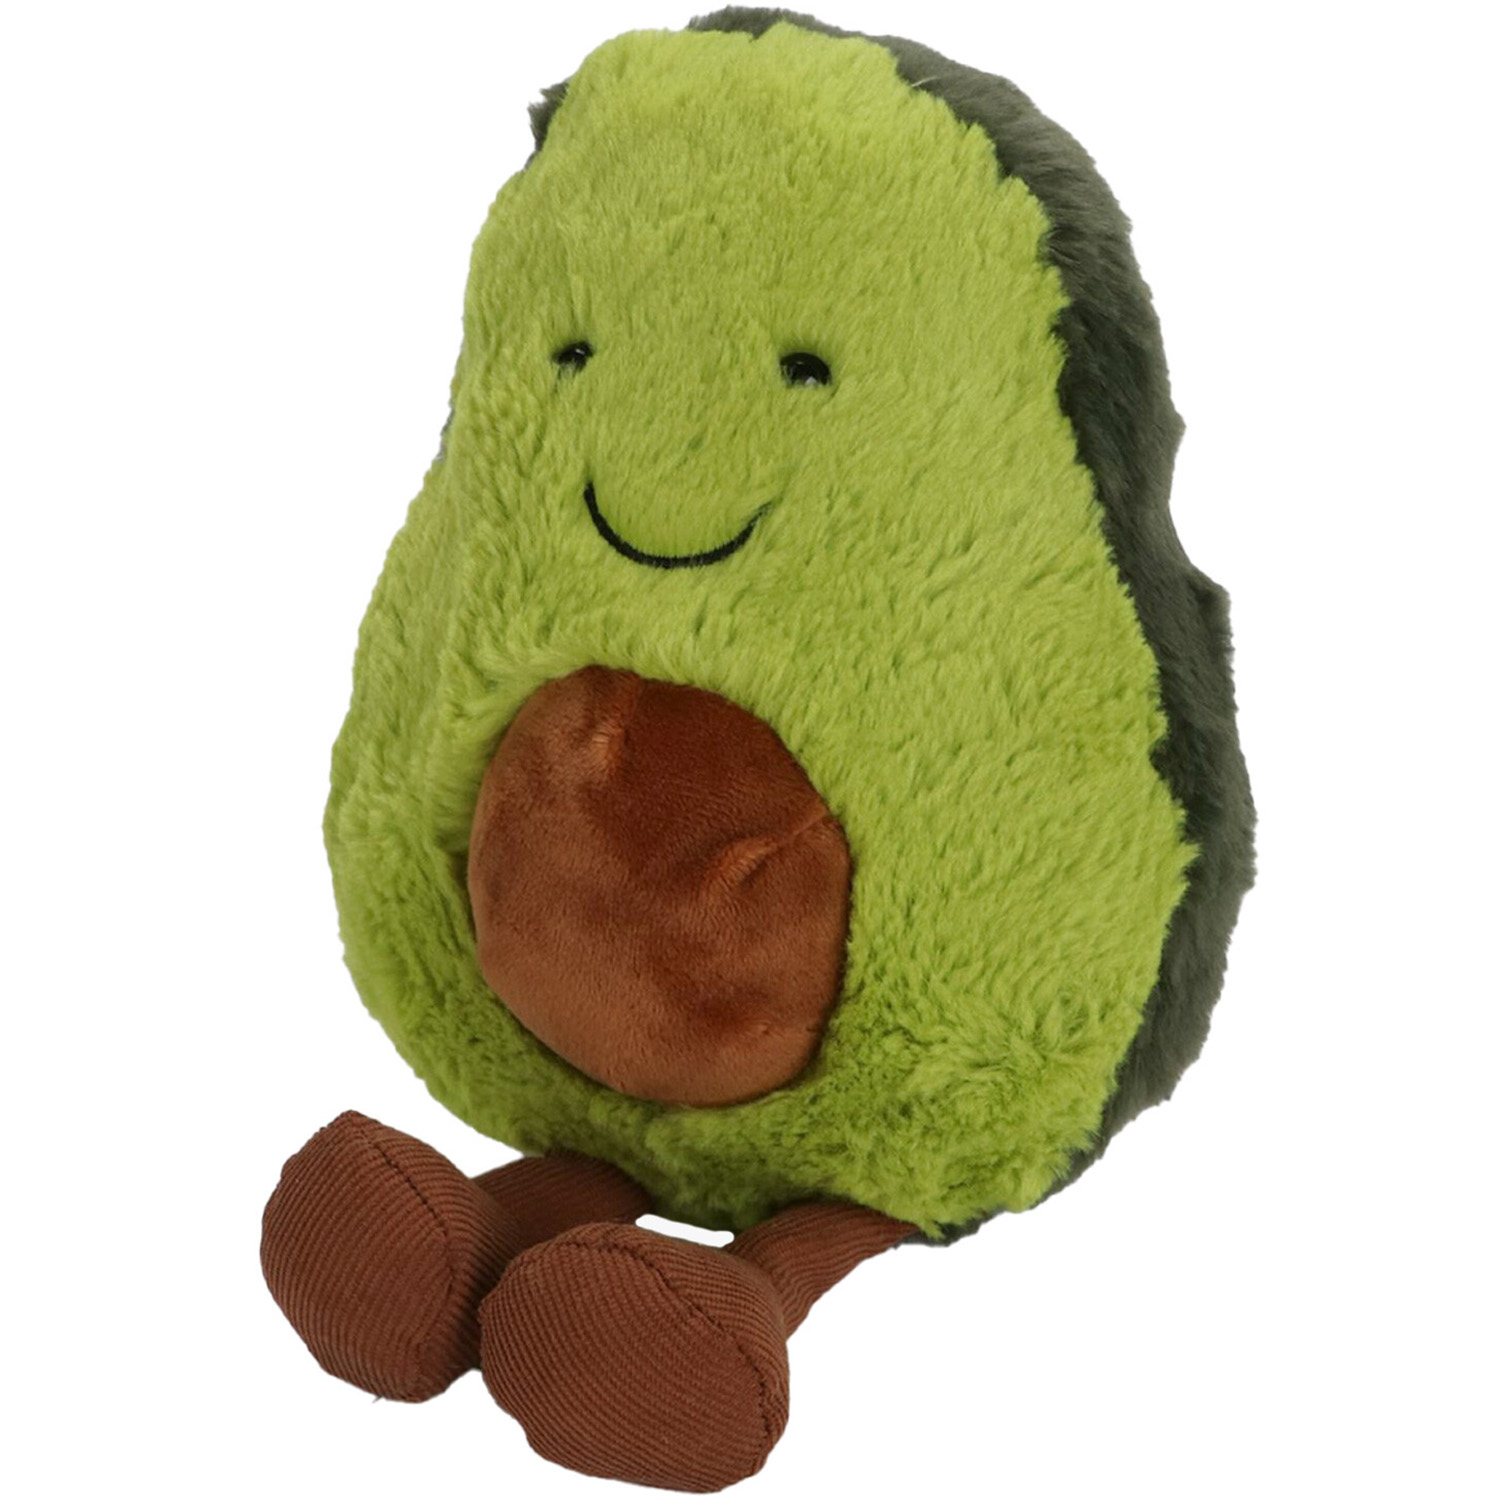 Avocado Plush Toy - Green Image 1